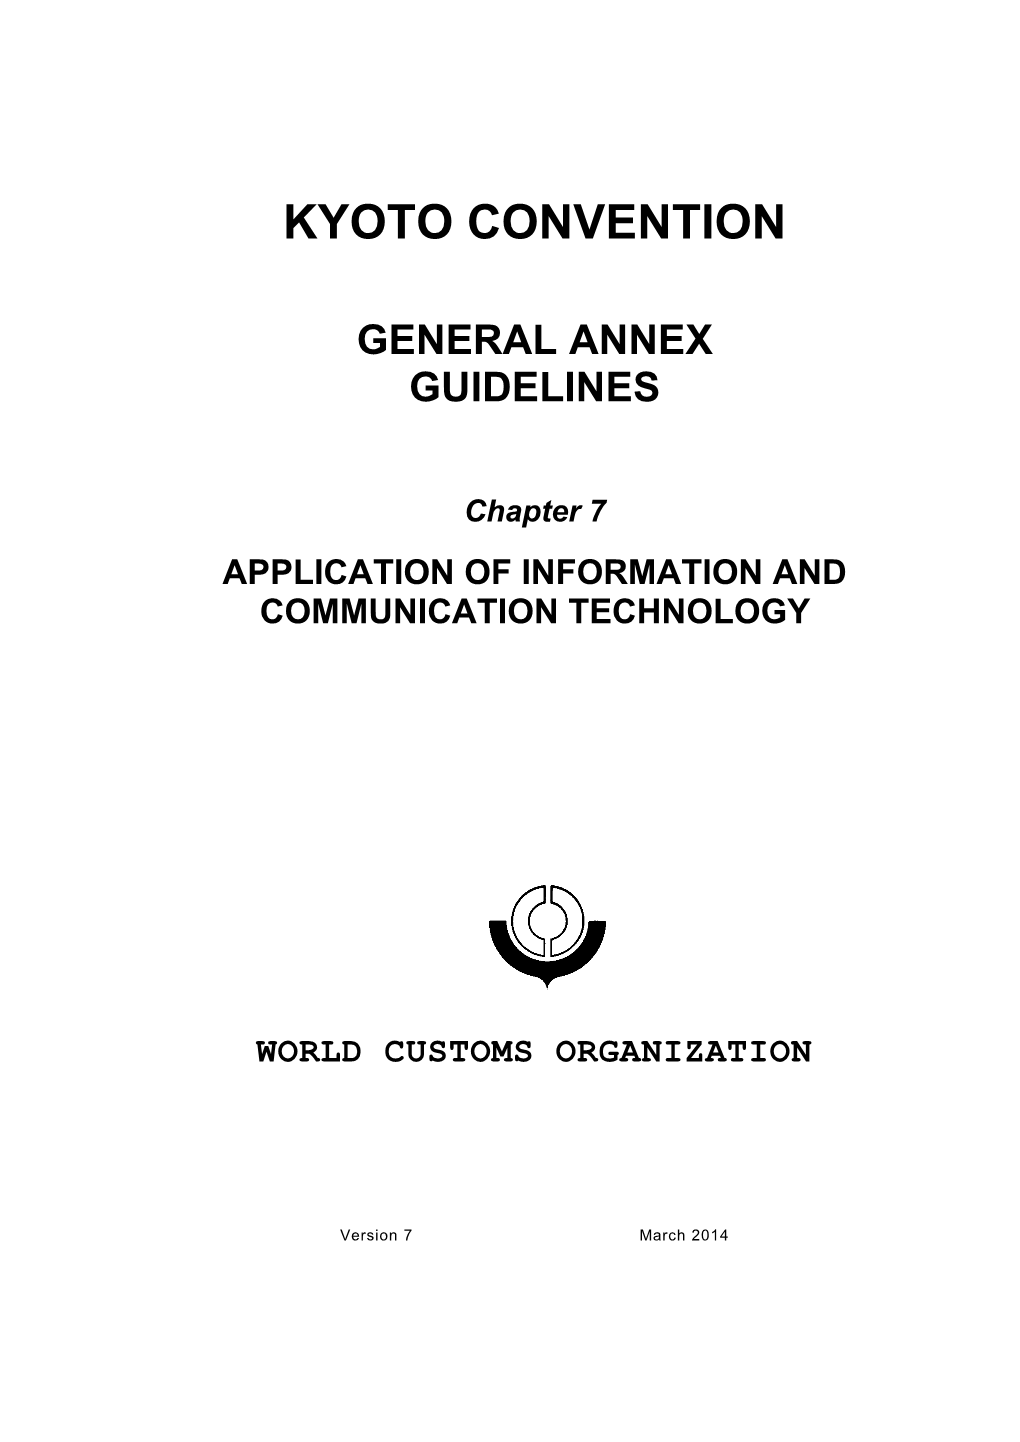 Kyoto Convention